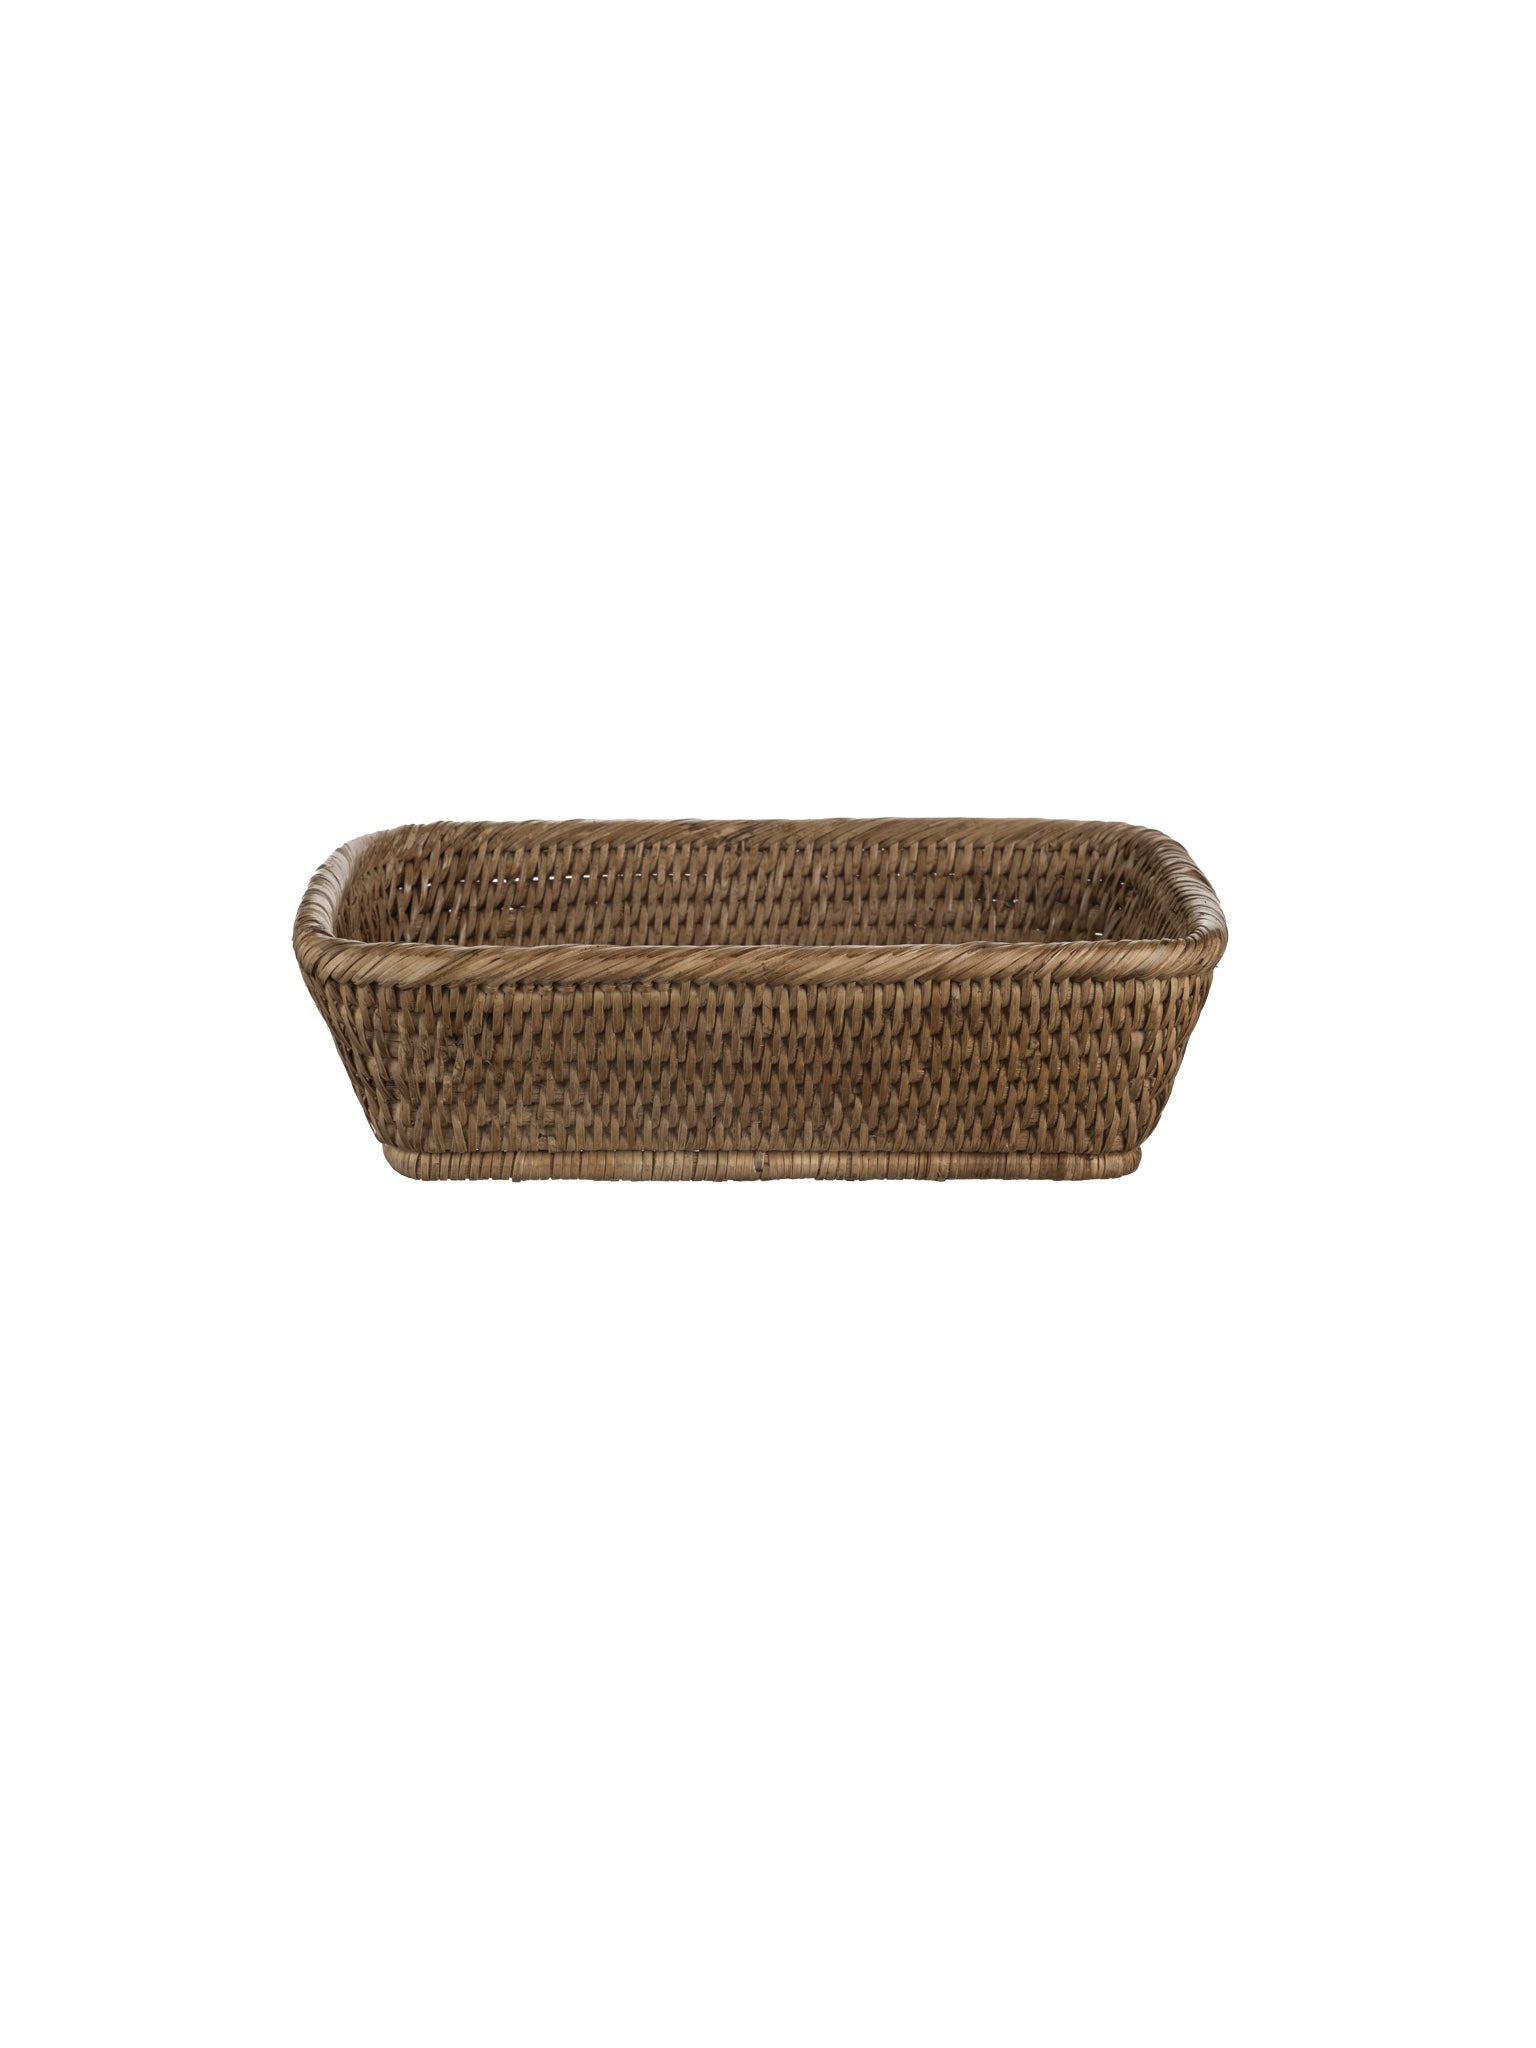 Natural Rattan Small Basket